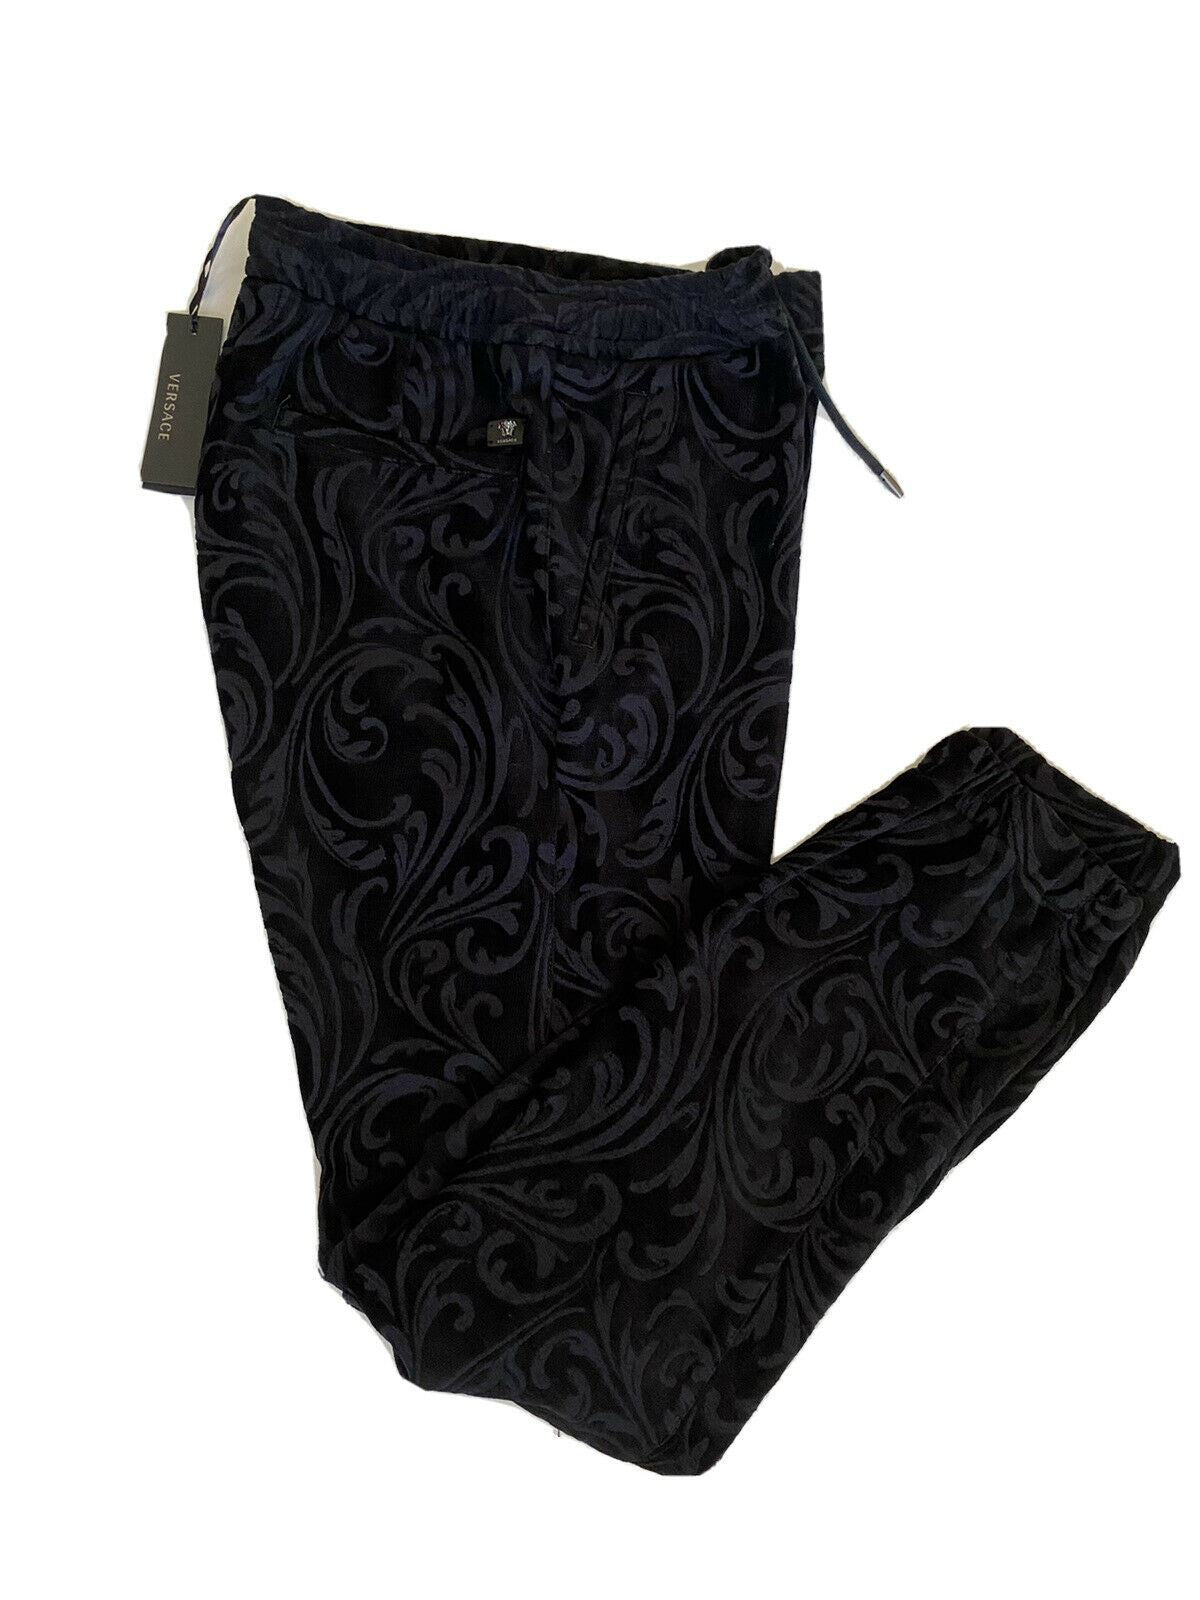 NWT $975 Versace Men's Black Activewear Pants Size Medium XL in Italy A79524